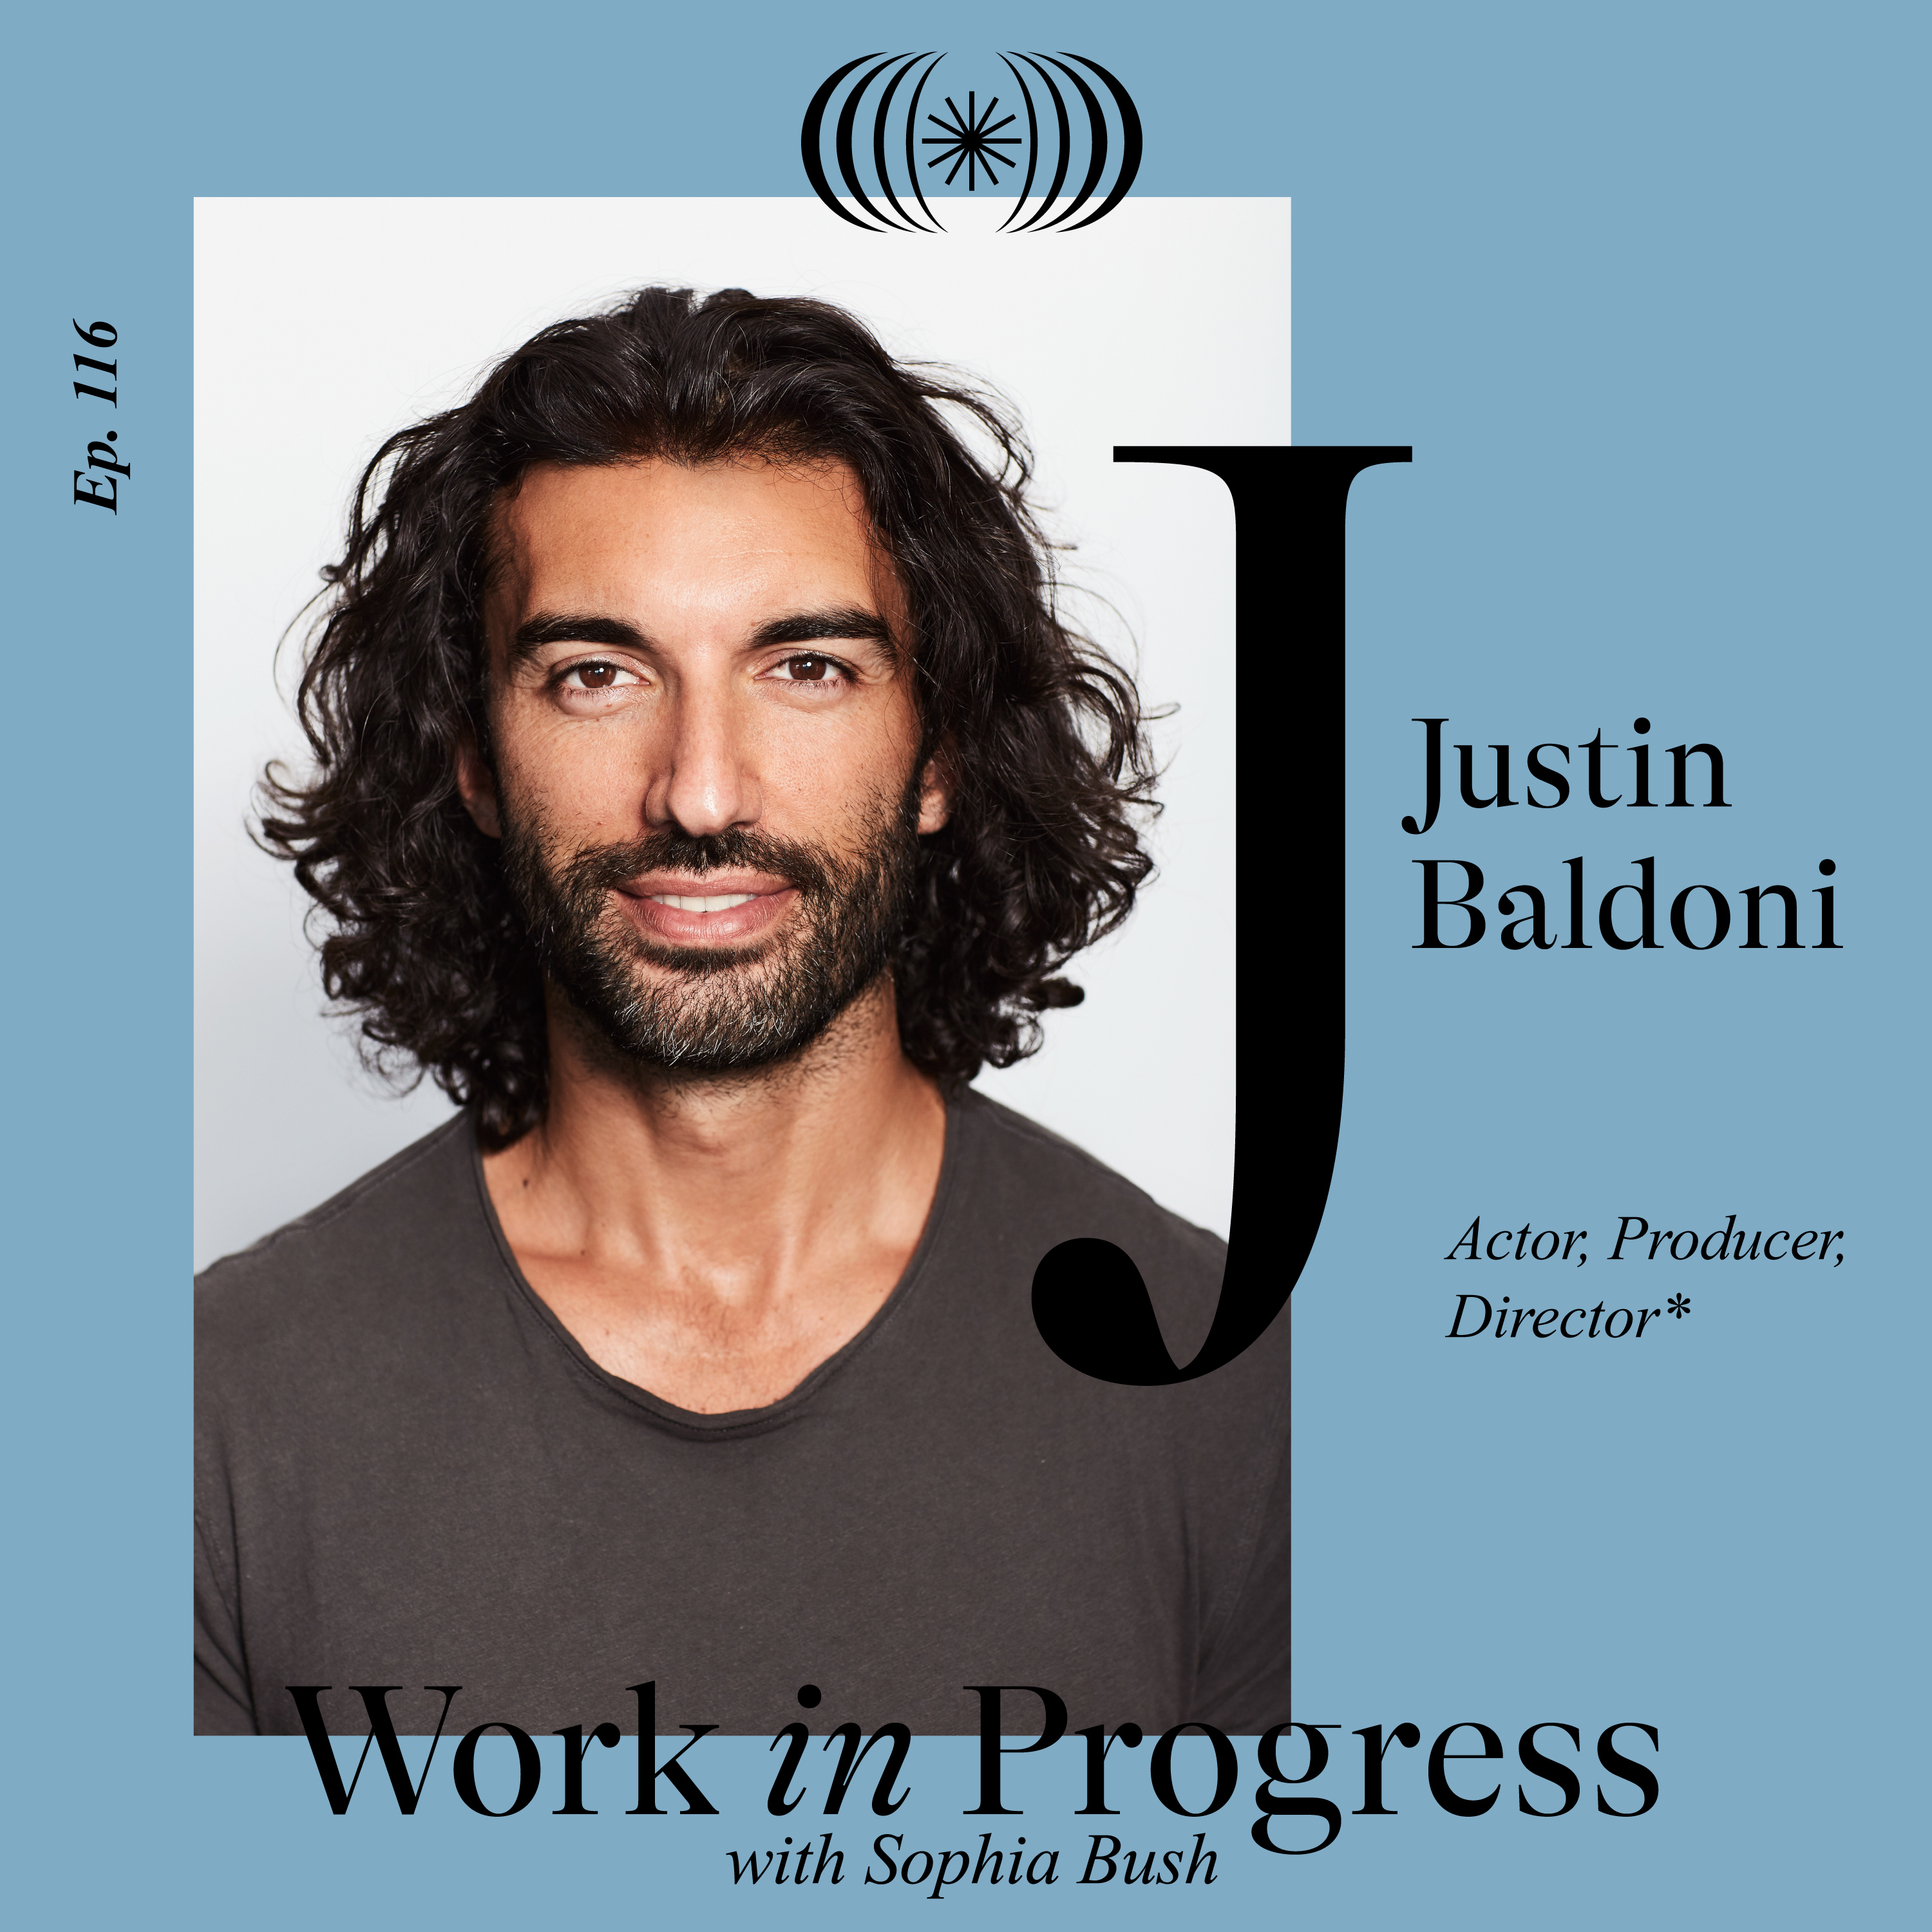 Justin Baldoni